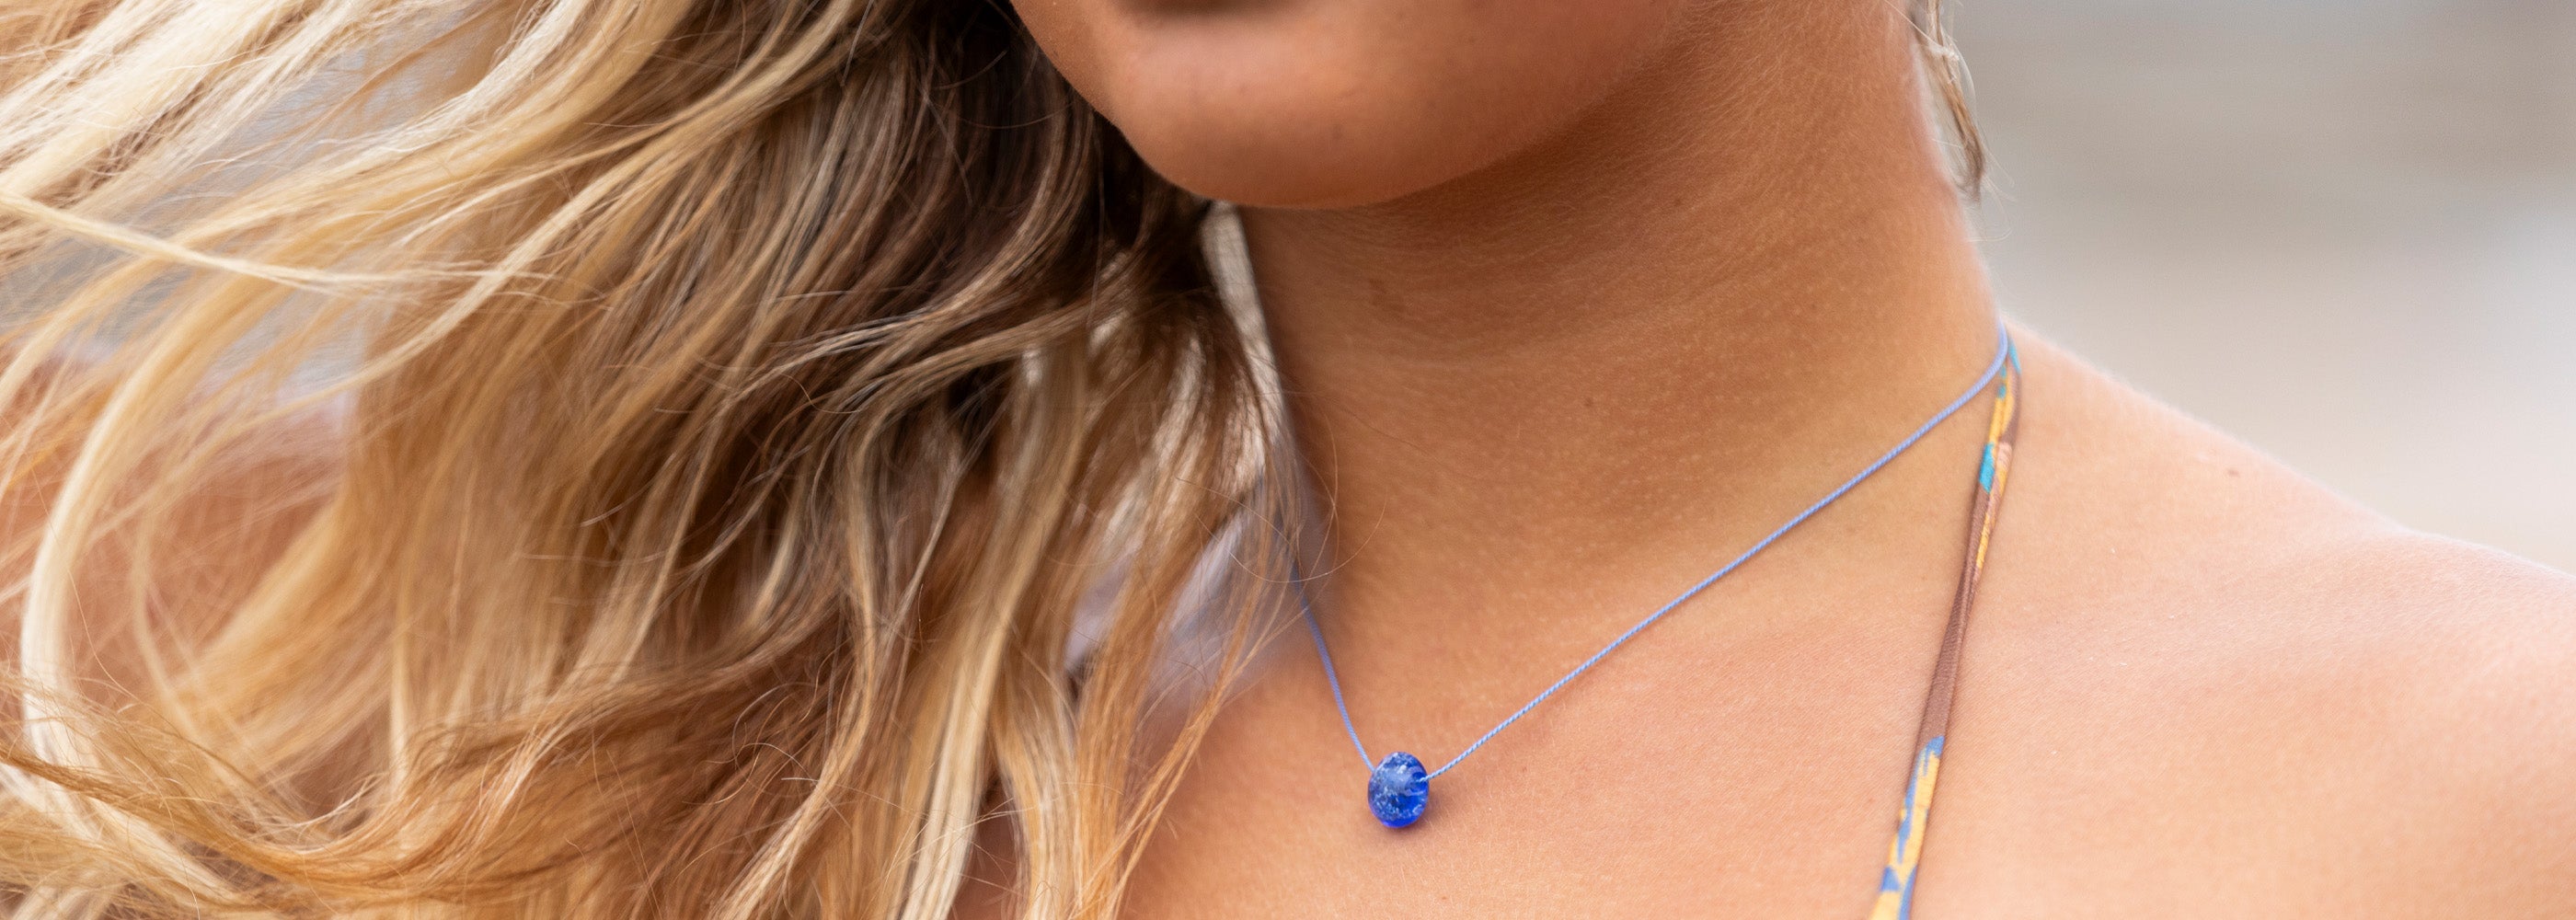 Dark blue glass sand pebble on blue silk necklace.